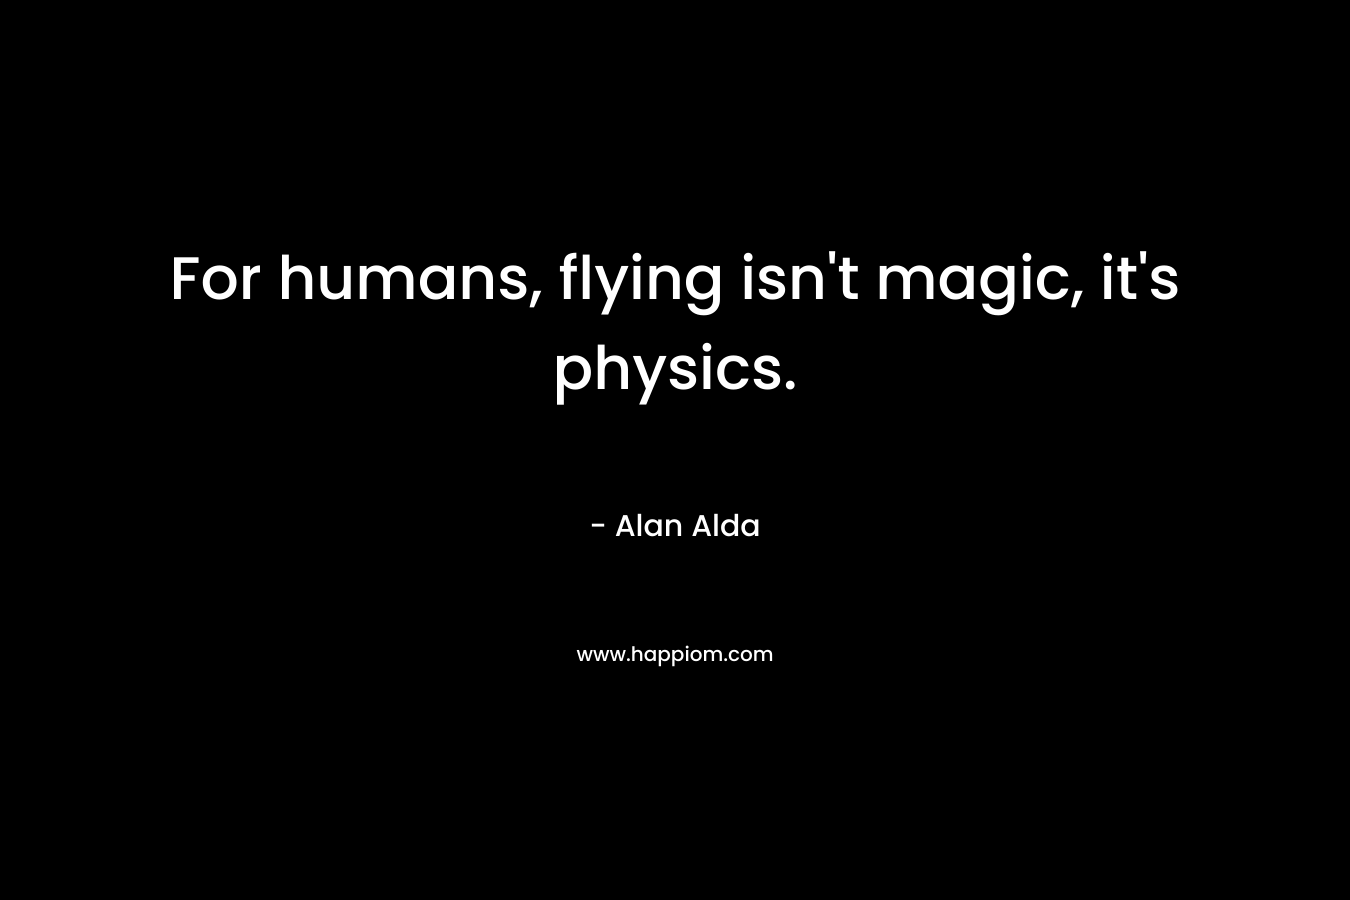 For humans, flying isn’t magic, it’s physics. – Alan Alda